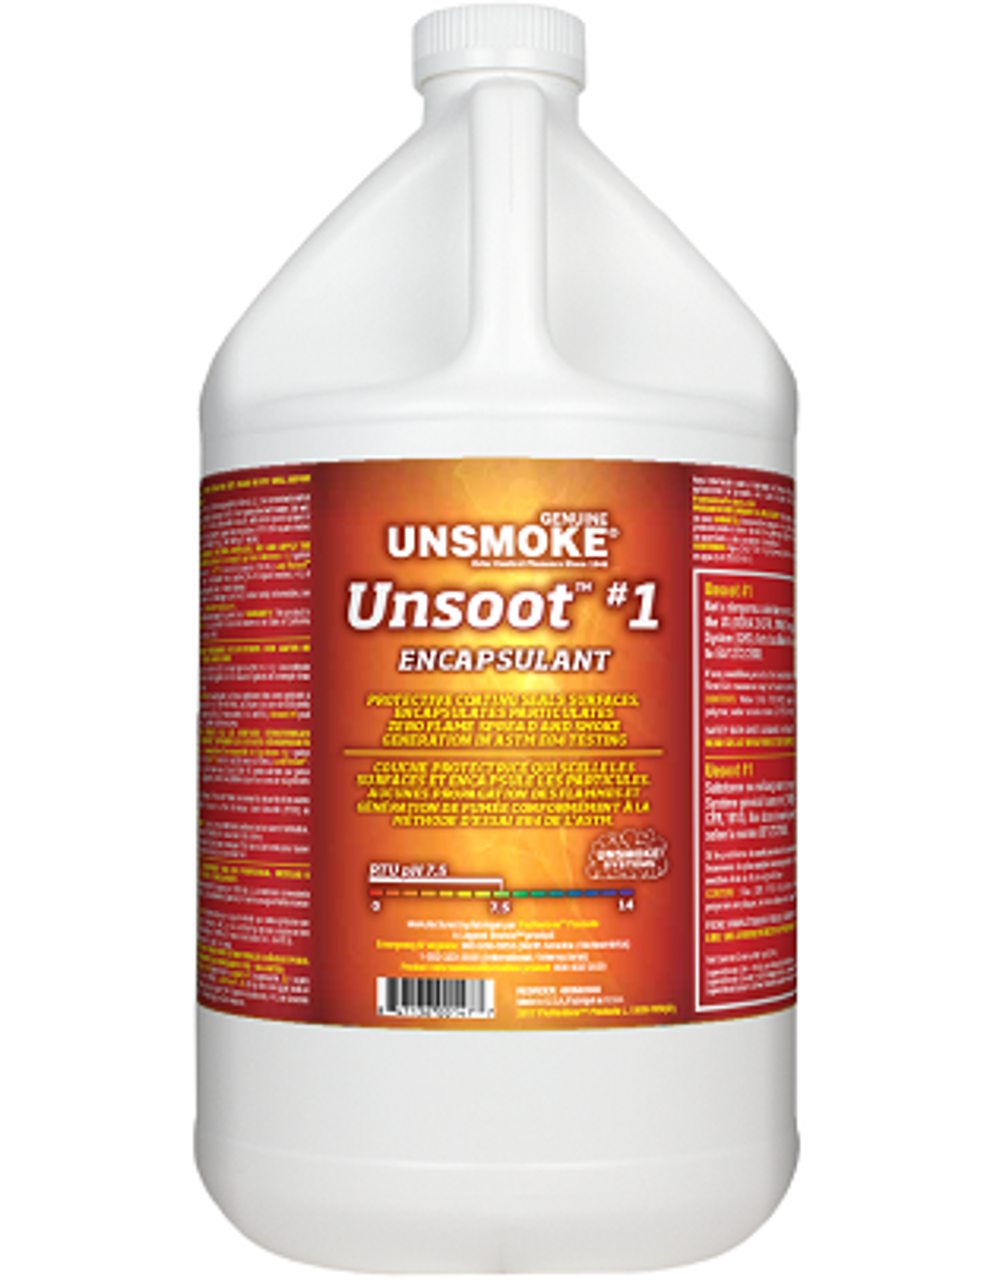 Unsmoke Unsoot #1 Encapsulant - 1gal - CASE of 4ea